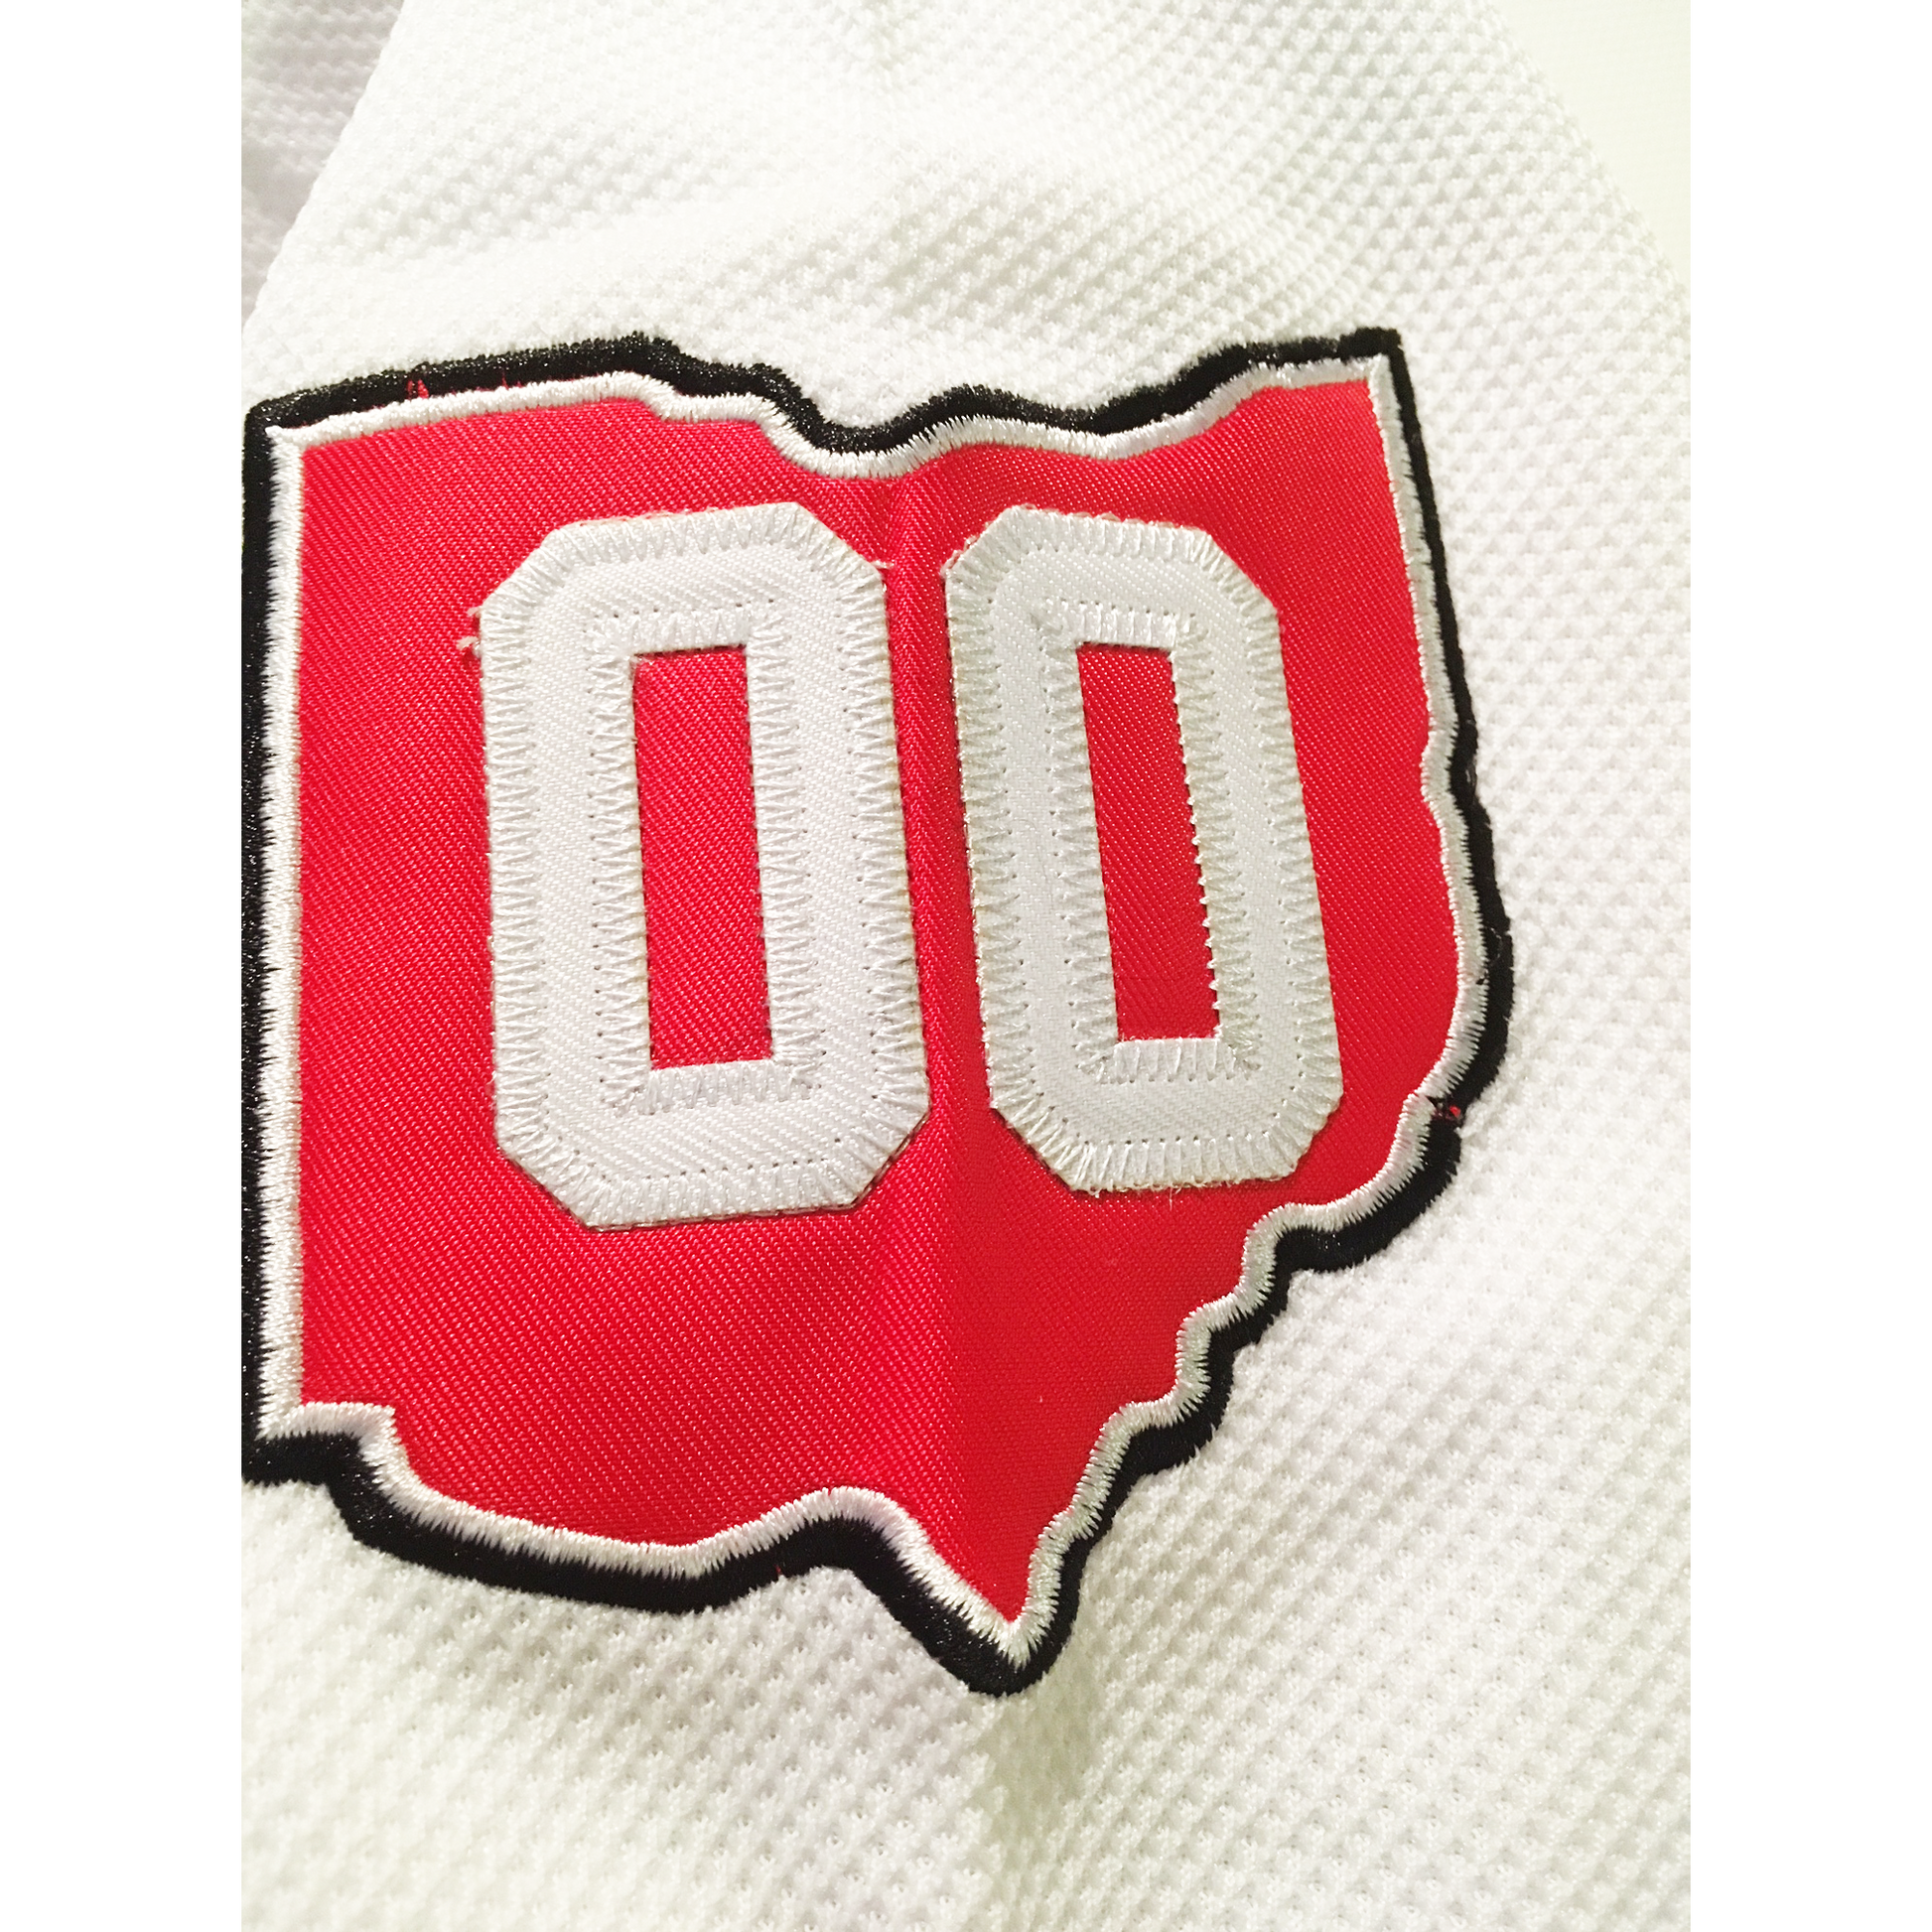 Desperately ISO] Cleveland Barons (NHL) jersey : r/hockeyjerseys